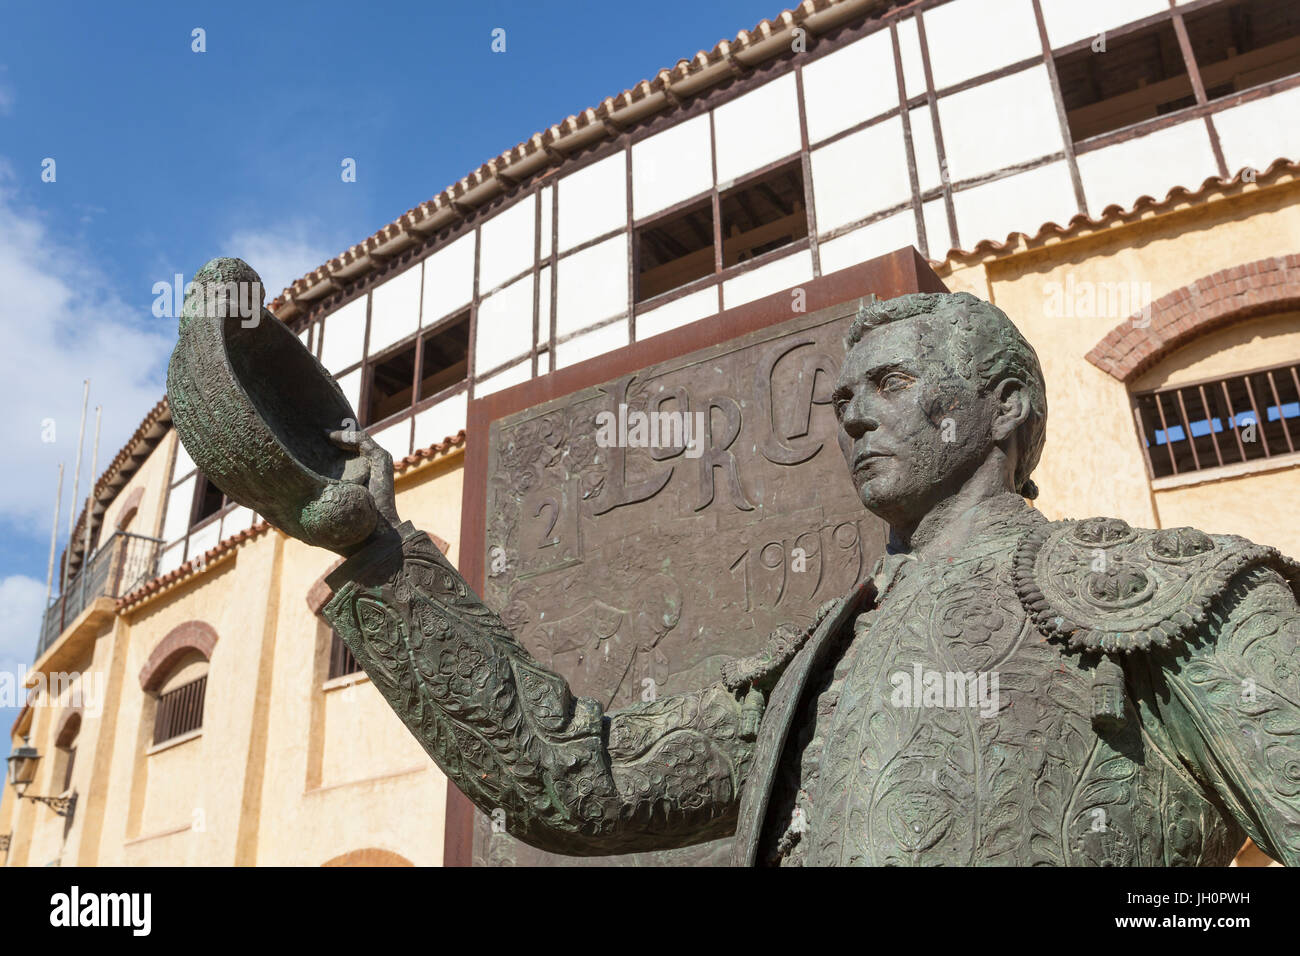 Lorca, Spanien - 29. Mai 2017: Historische Stierkampfarena in Lorca mit Denkmal der berühmten Torero Pepin Jimenez. Provinz Murcia, Spanien Stockfoto